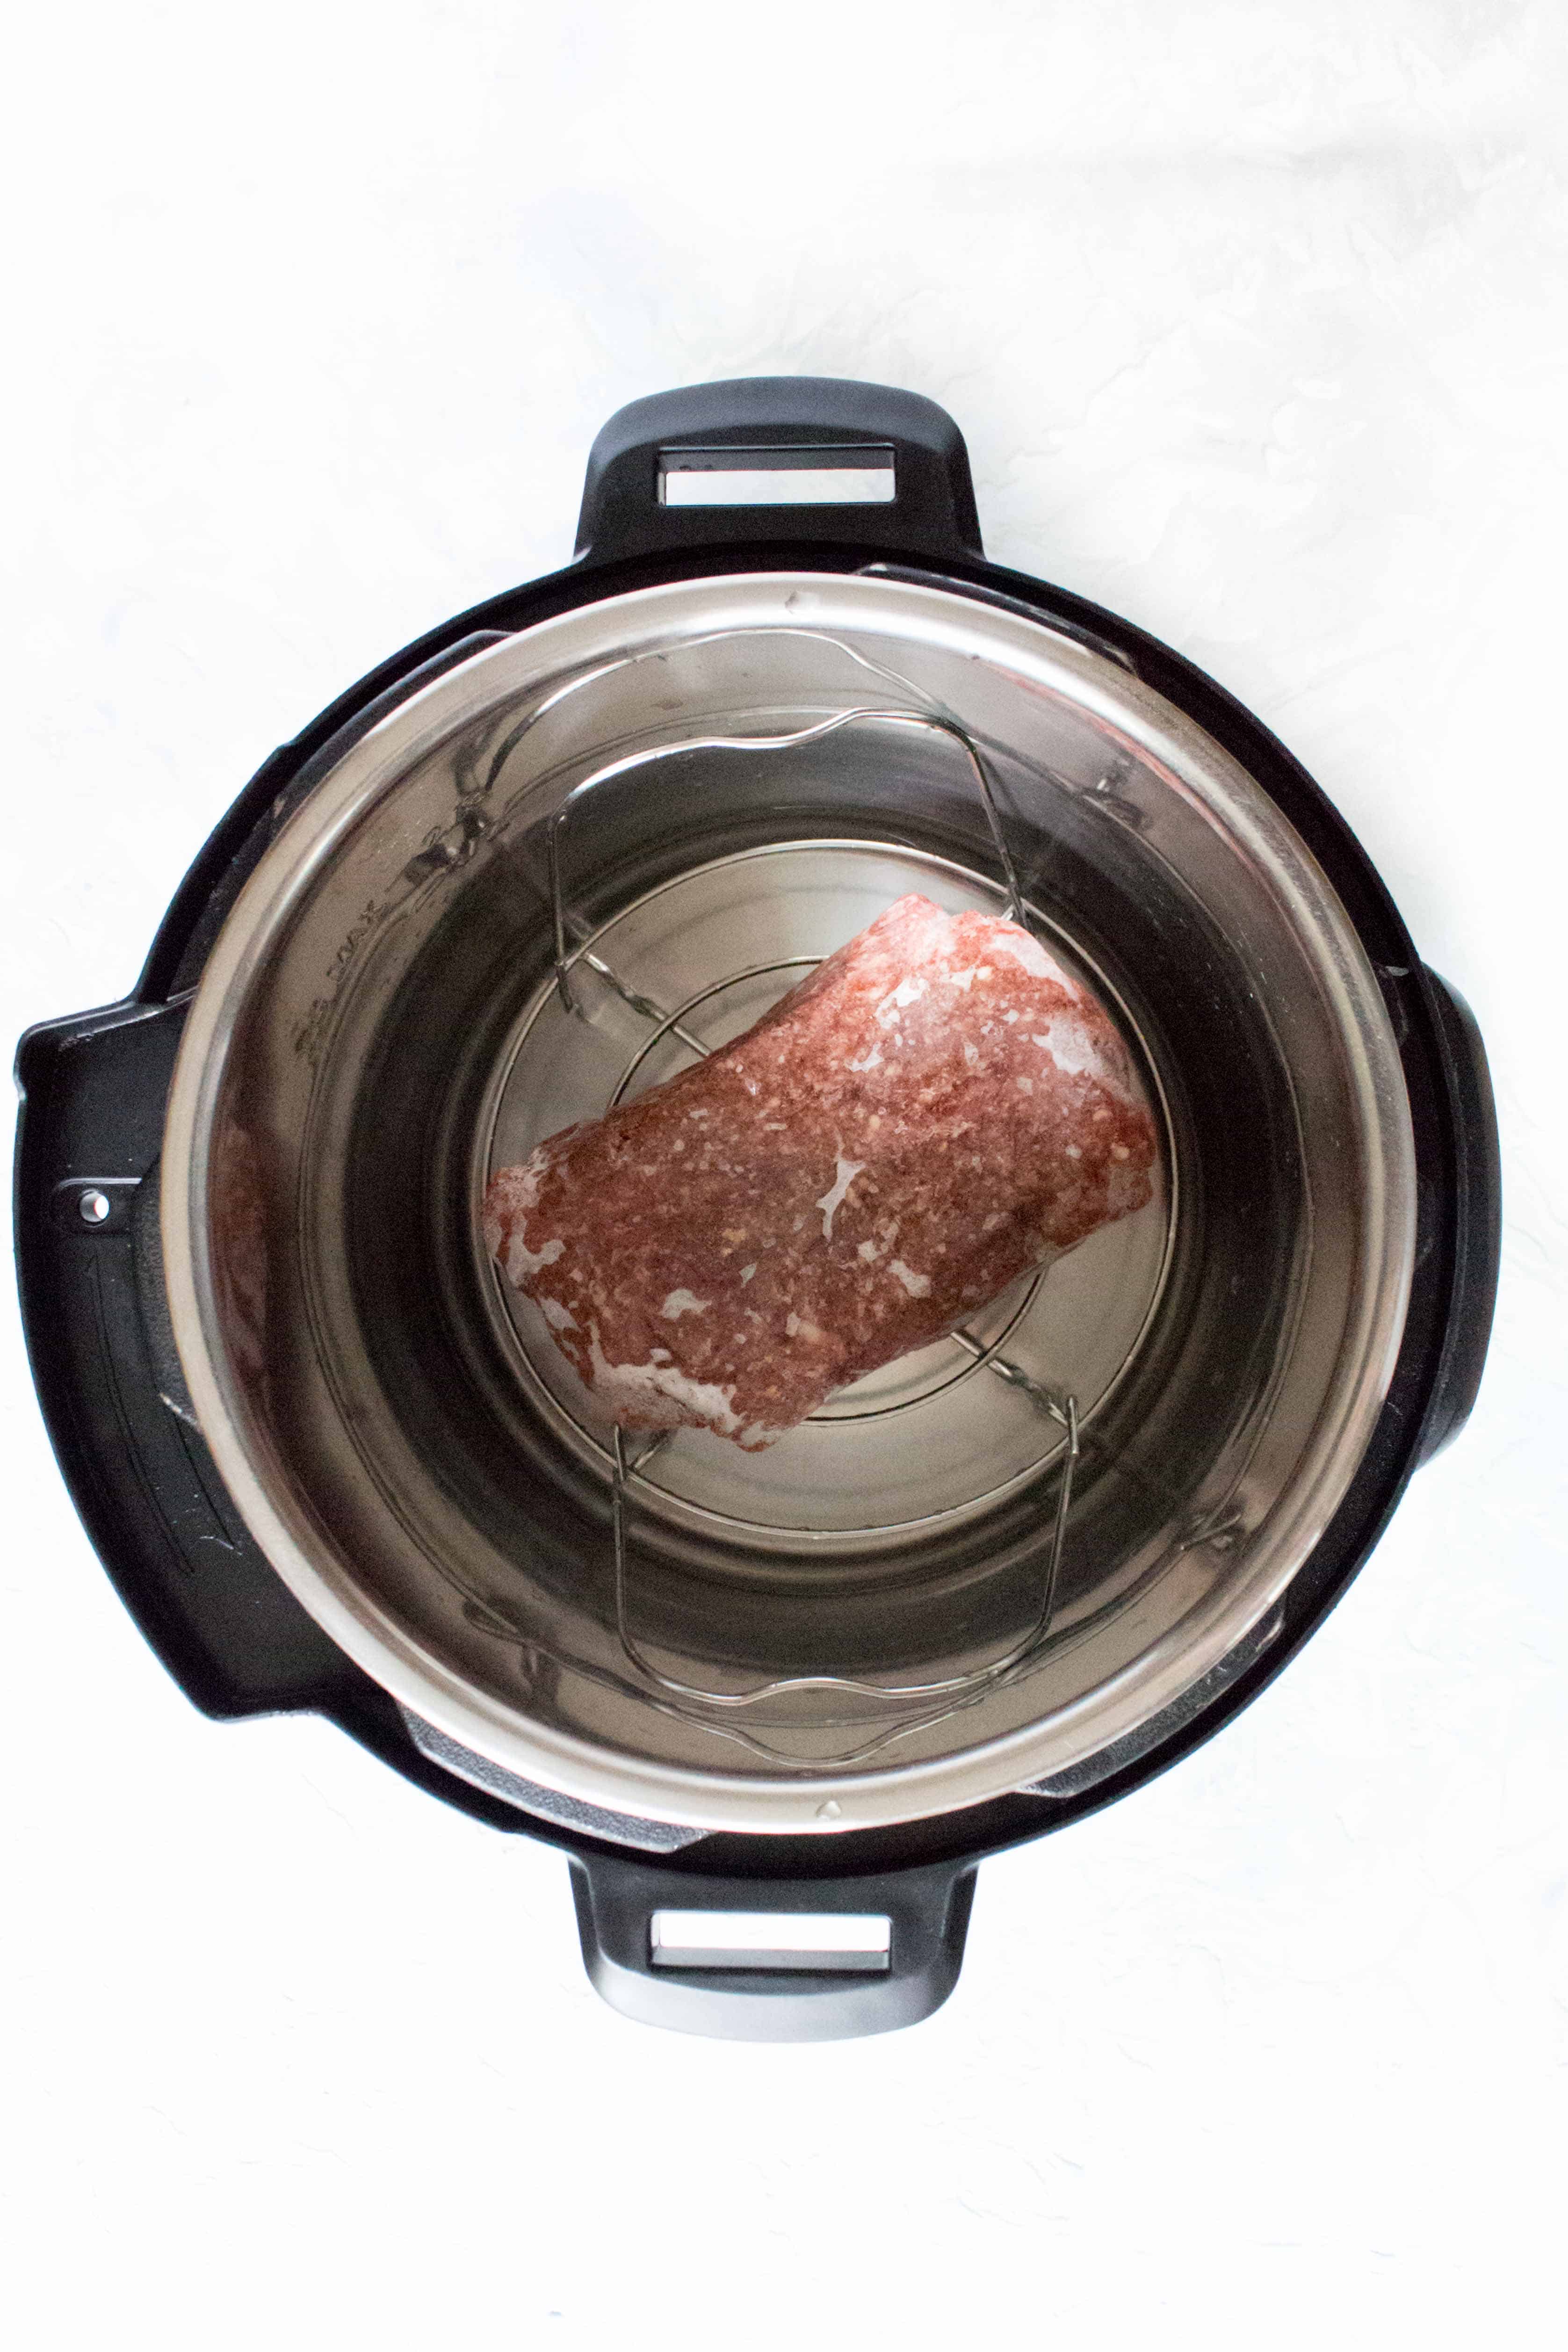 How to Cook Frozen Ground Beef in Instant Pot